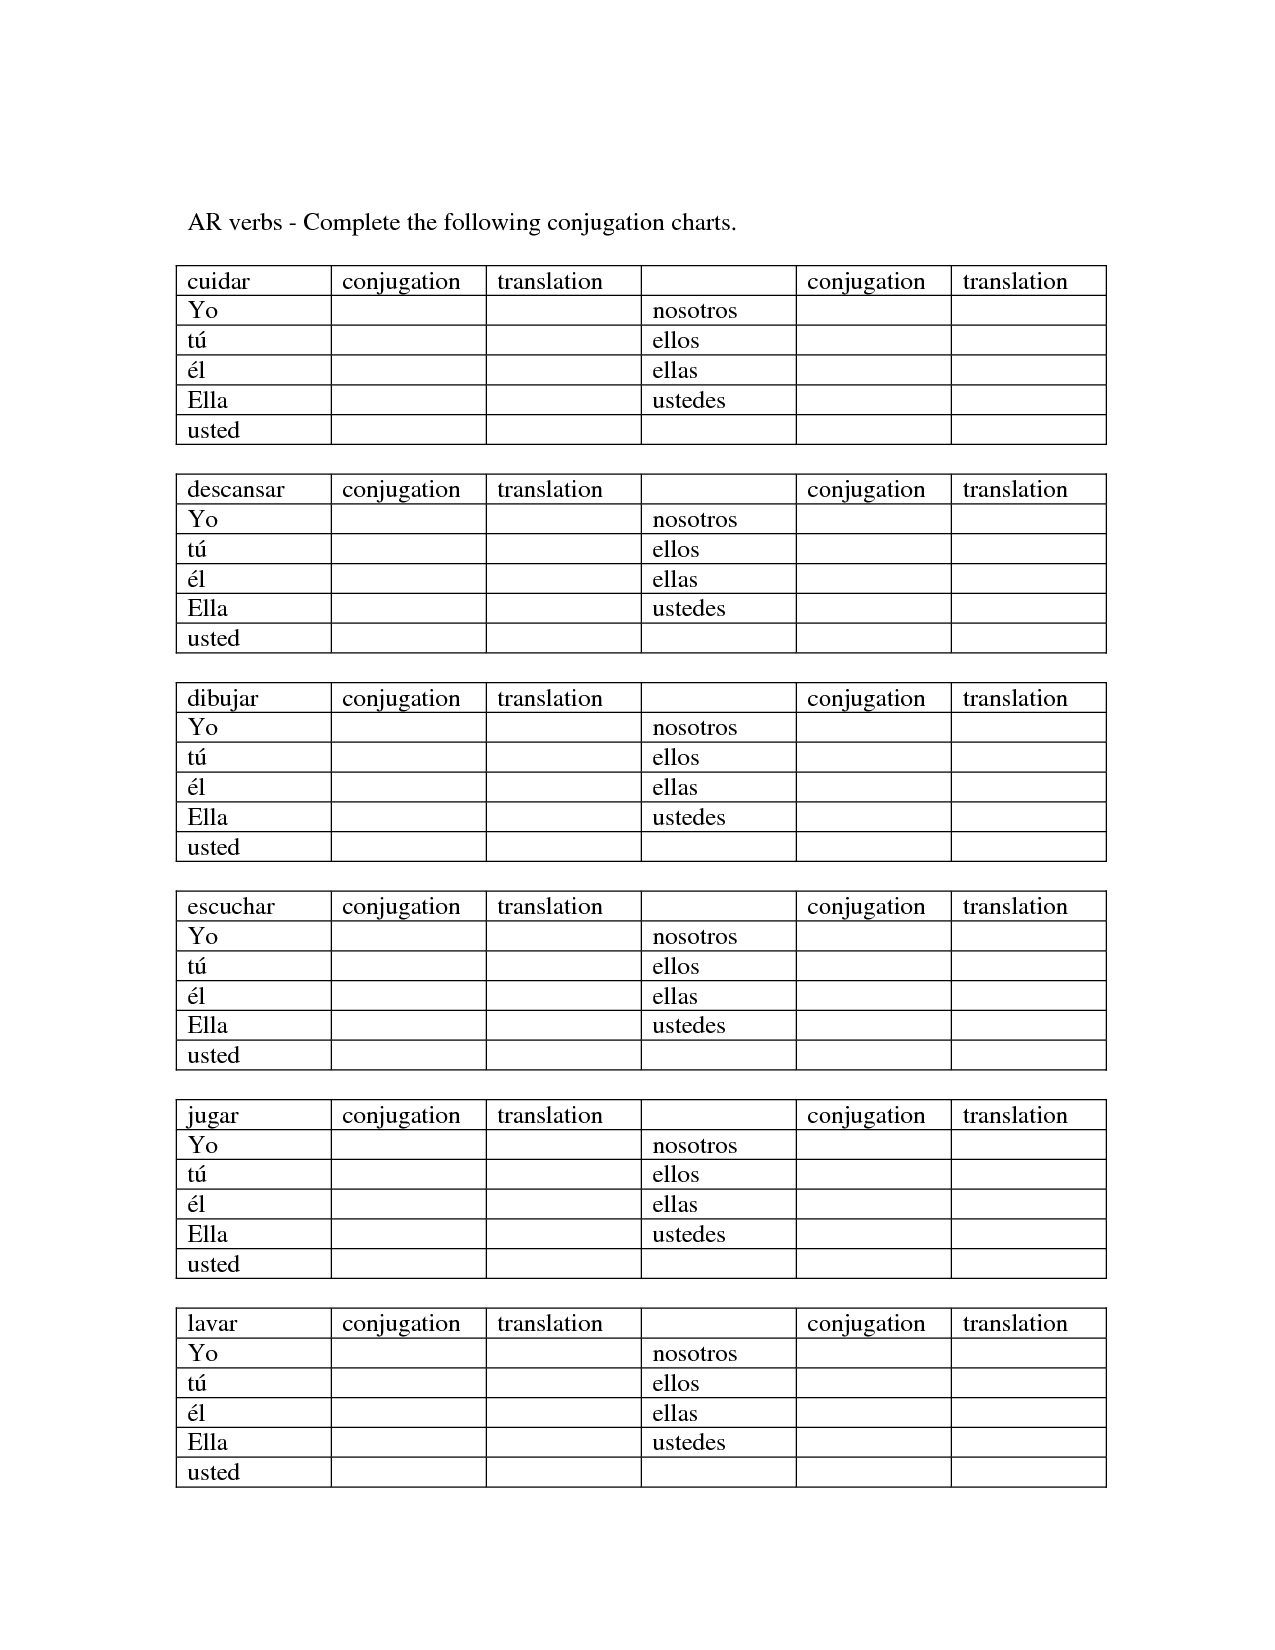 Spanish AR Verb Conjugation Chart Image